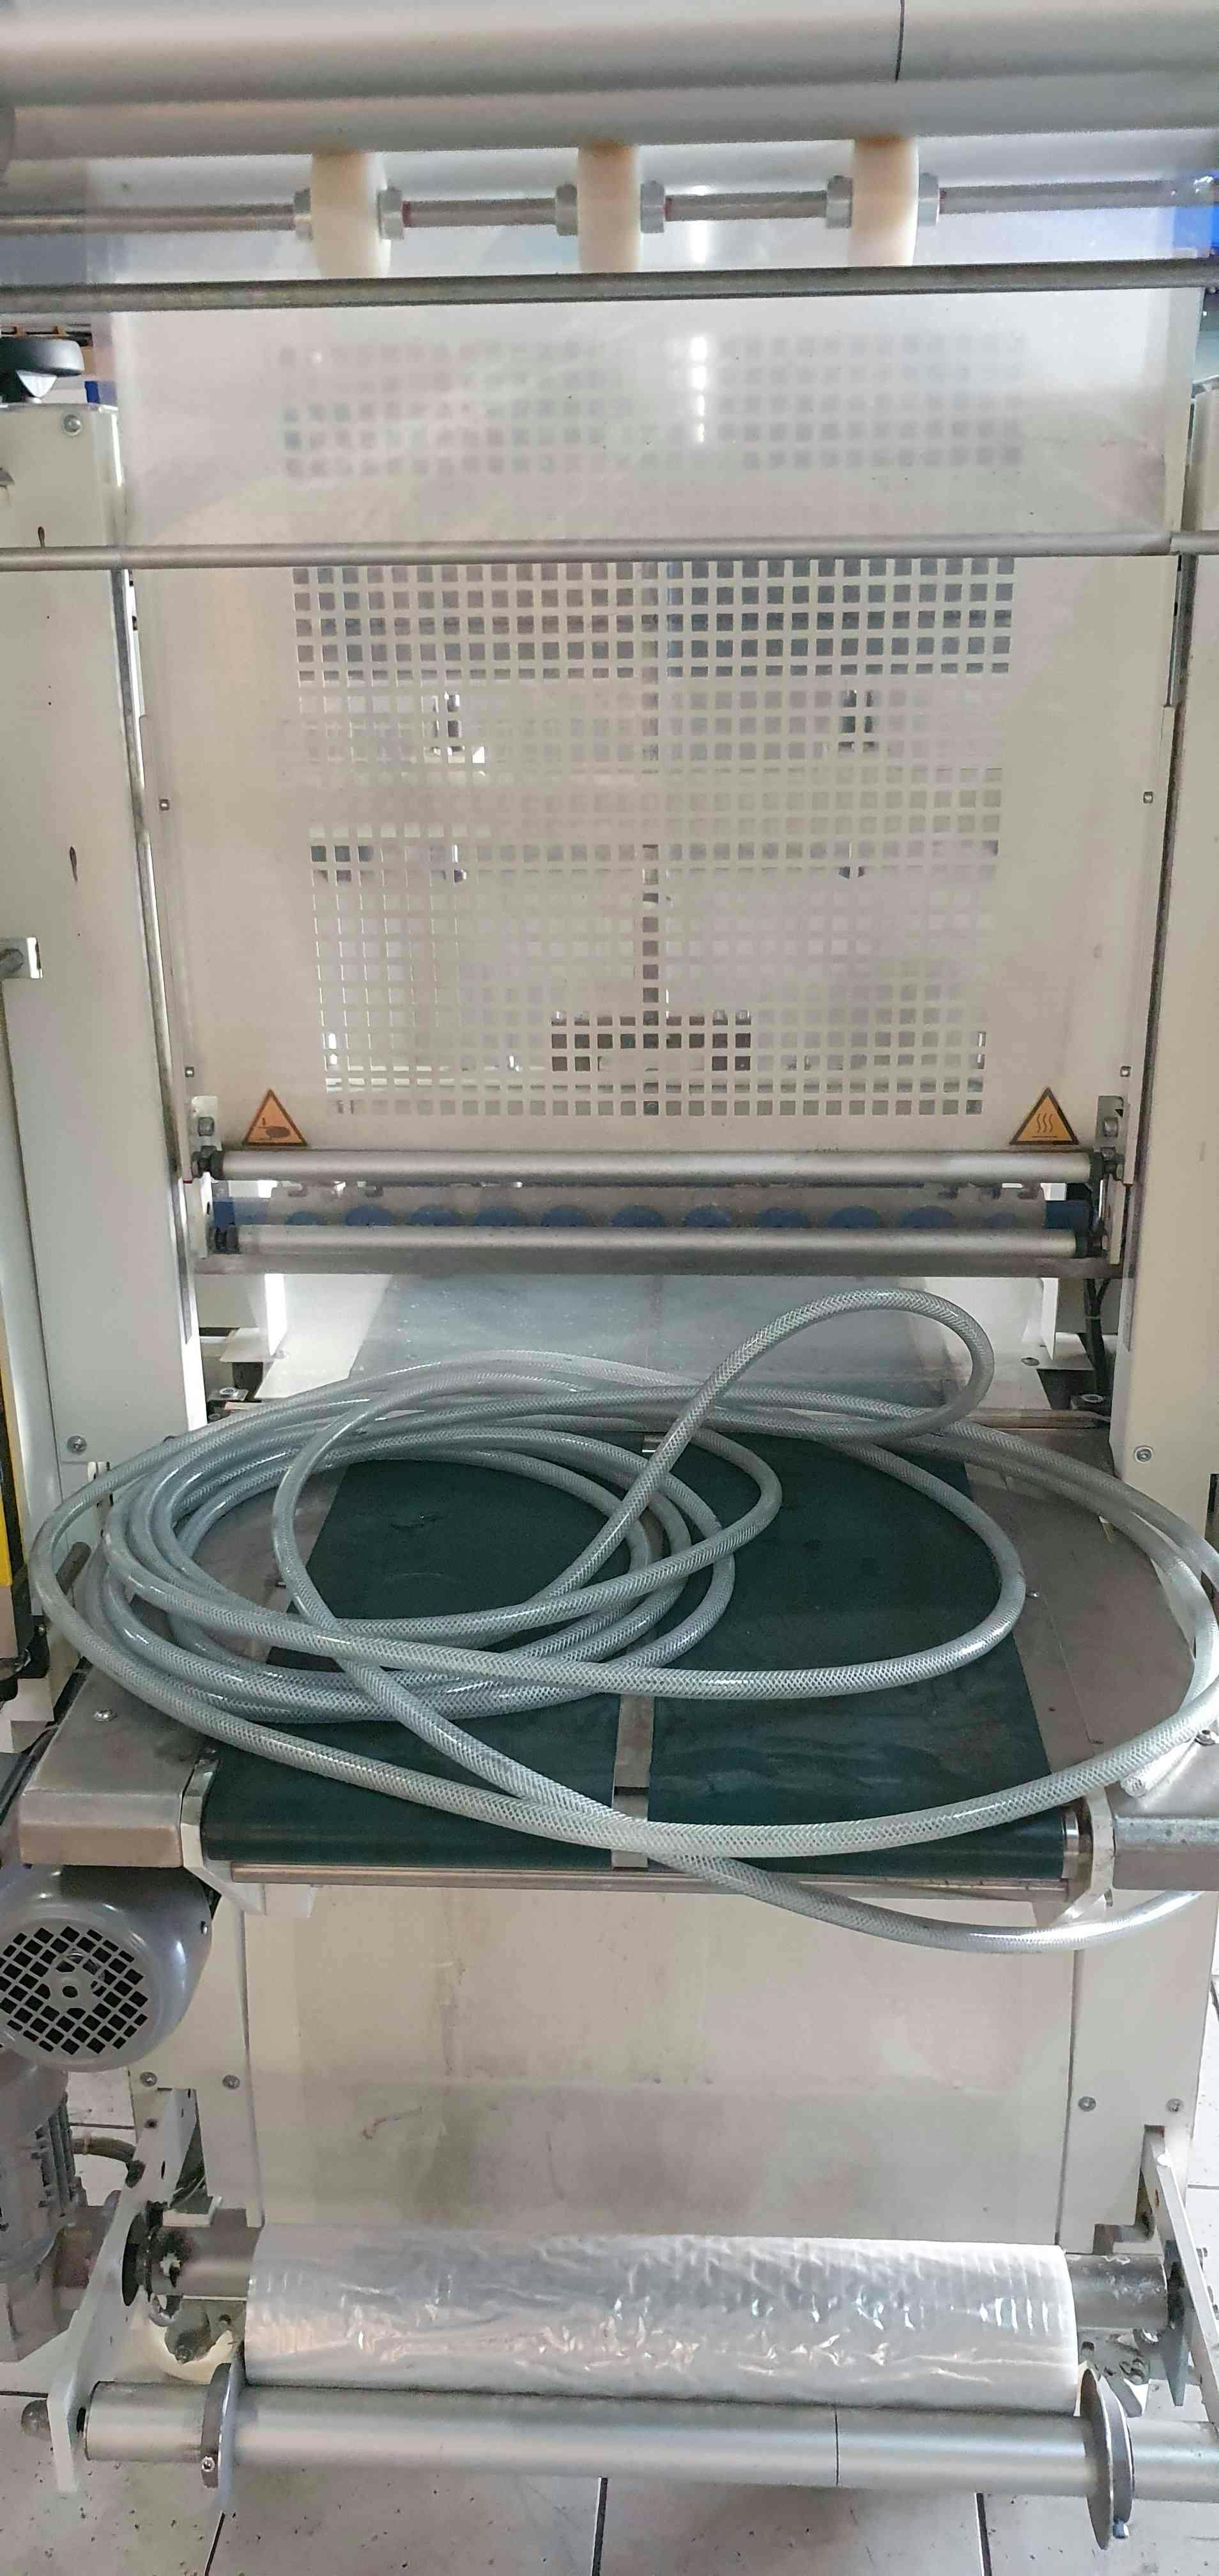 Jednostka sterująca of beck packautomaten KV 600 HP on-line 